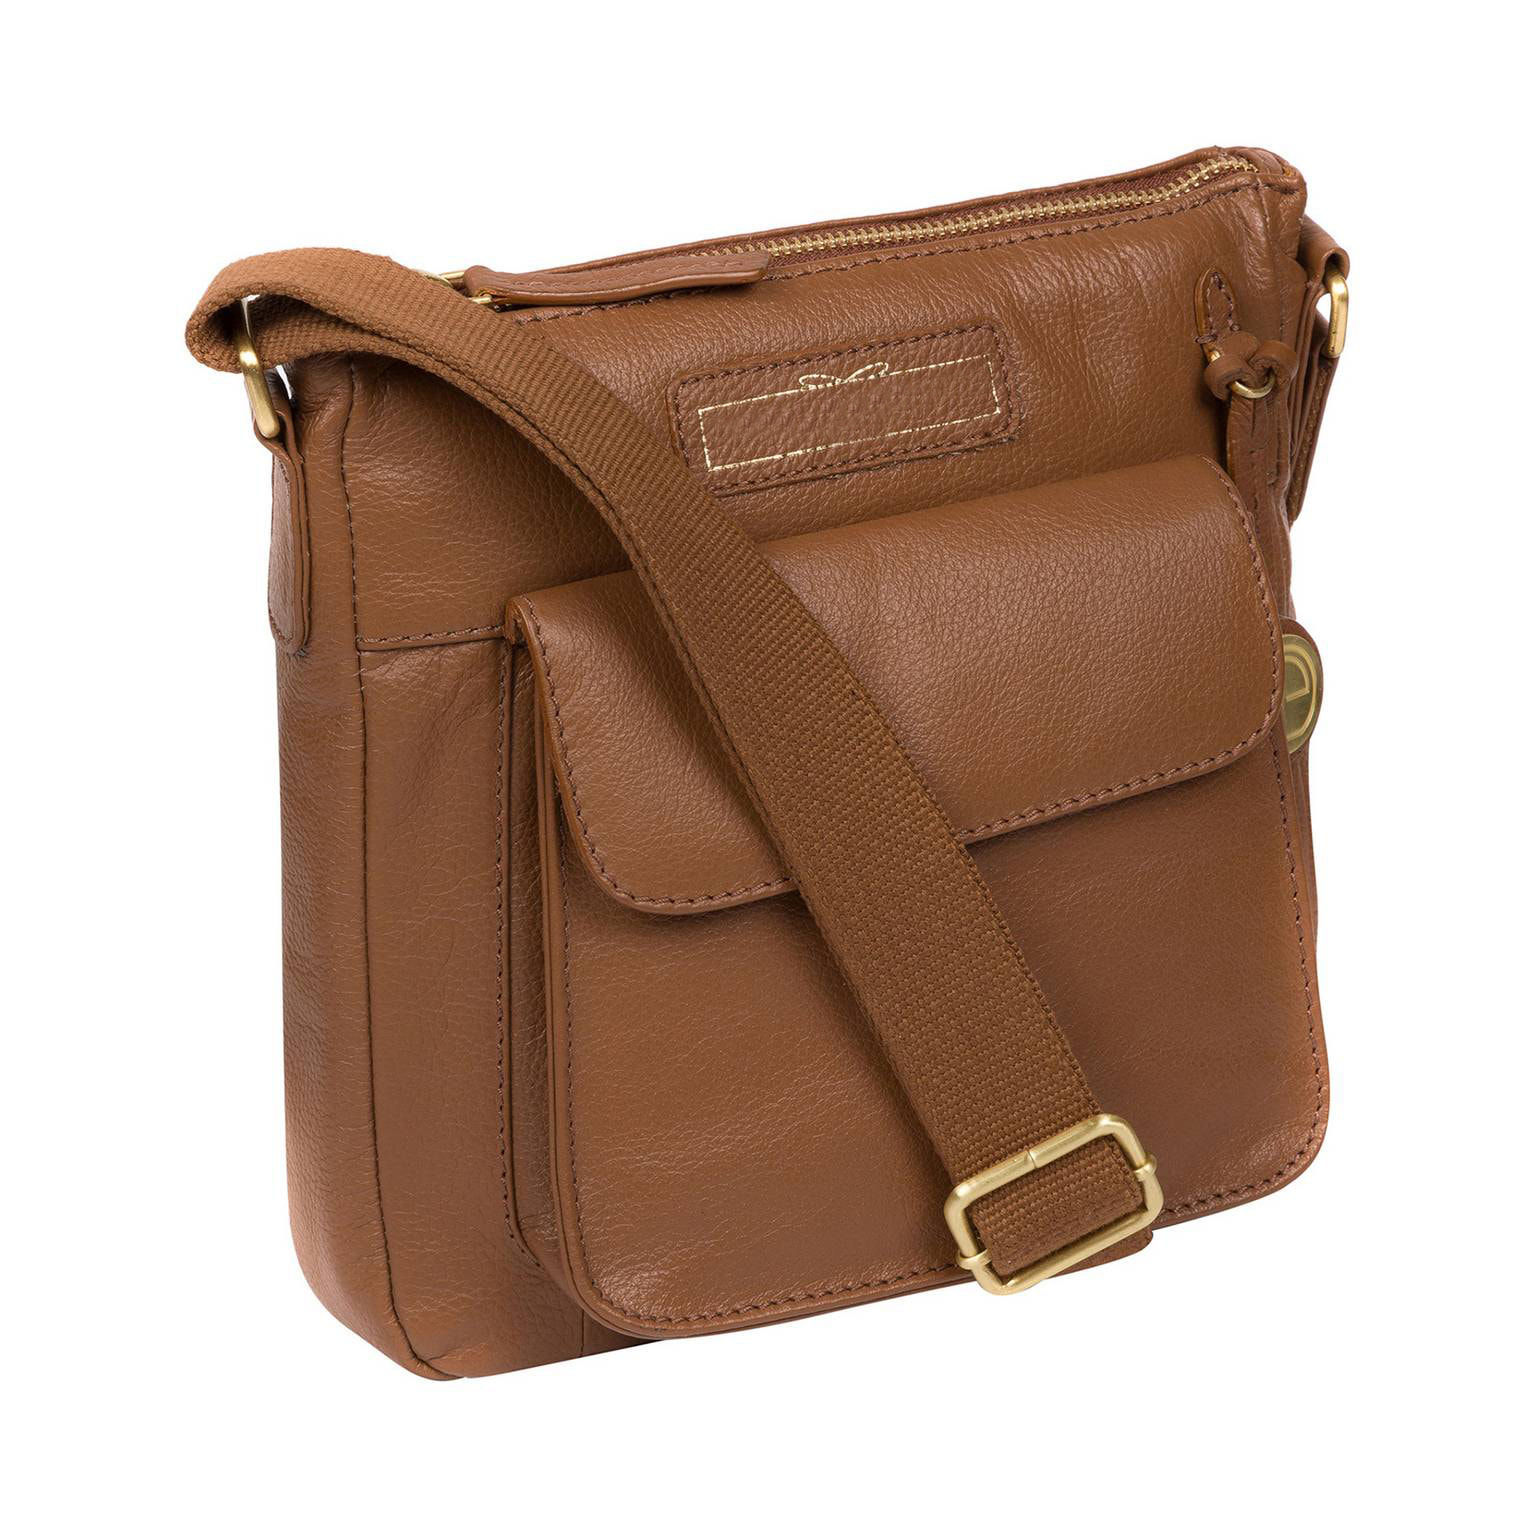 Tan Leather Shoulder Bag, Cross Body Bag